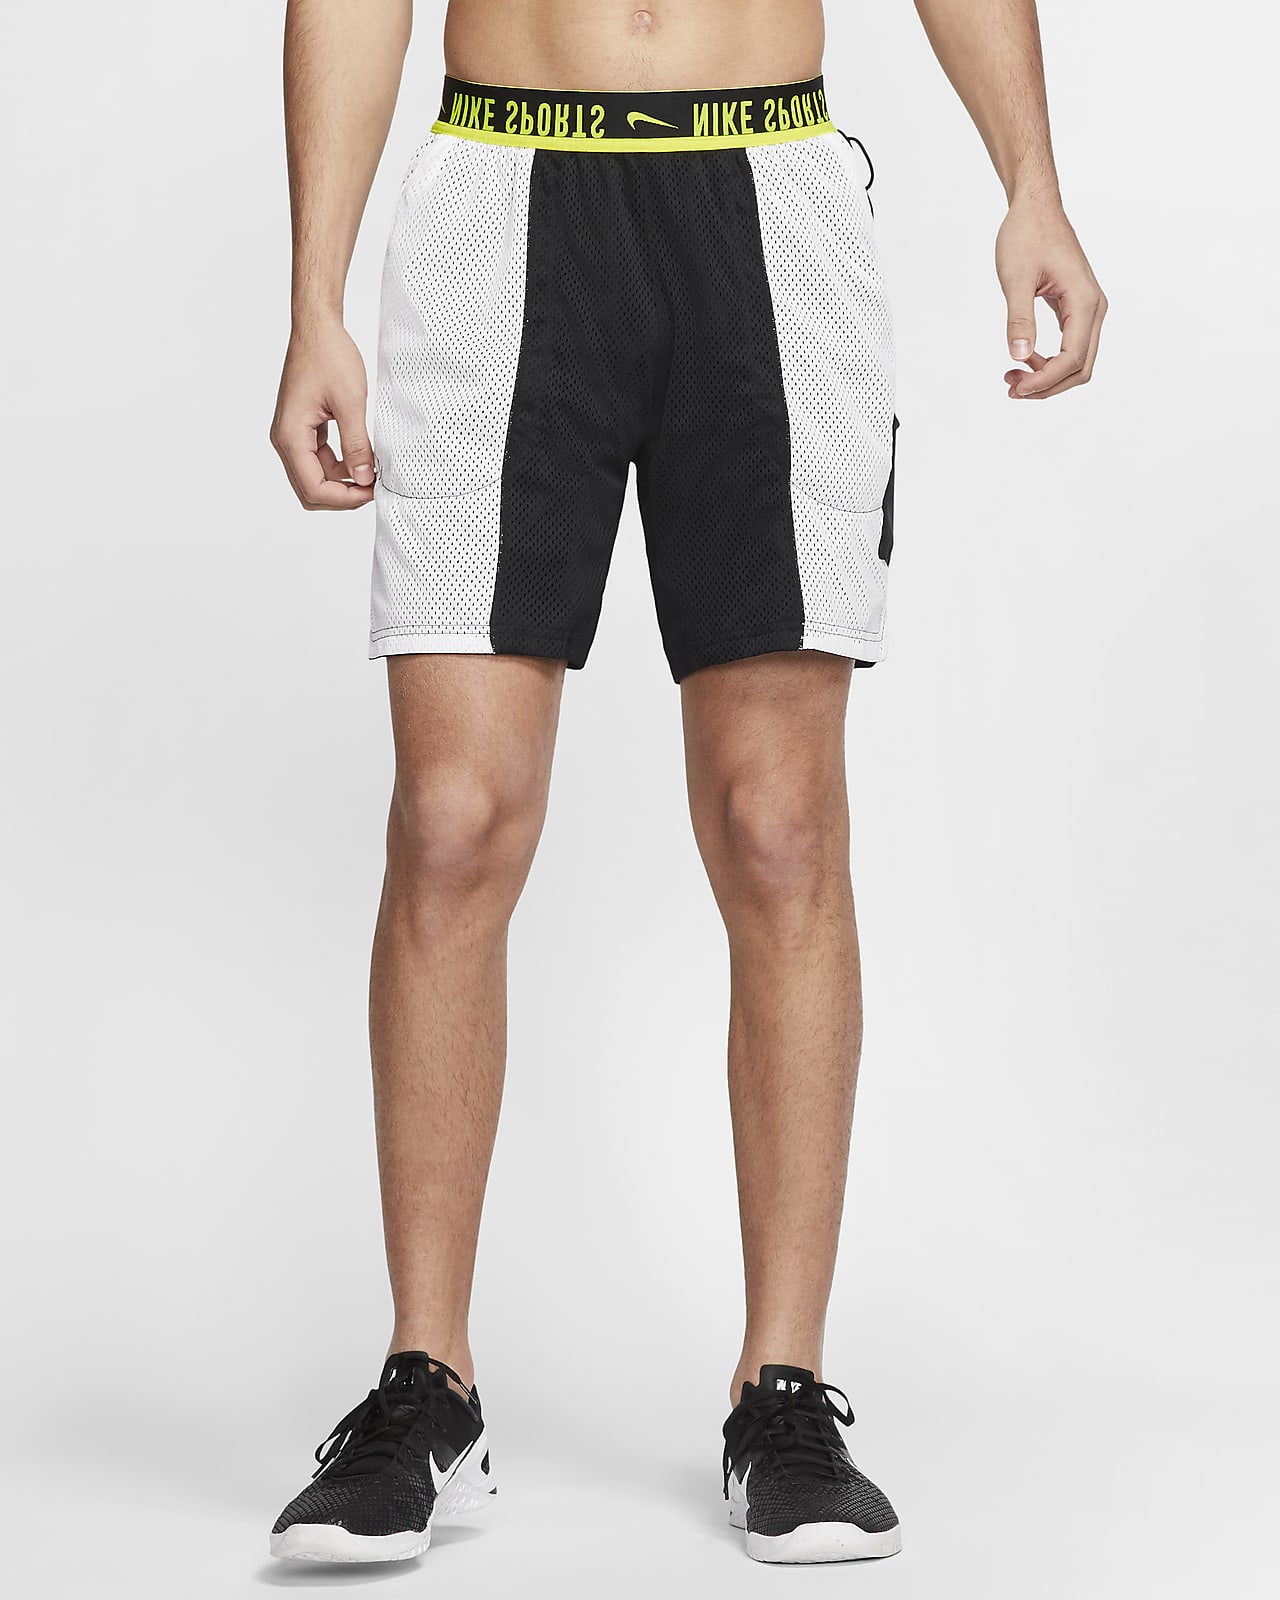 Shorts da training reversibili Nike - Uomo